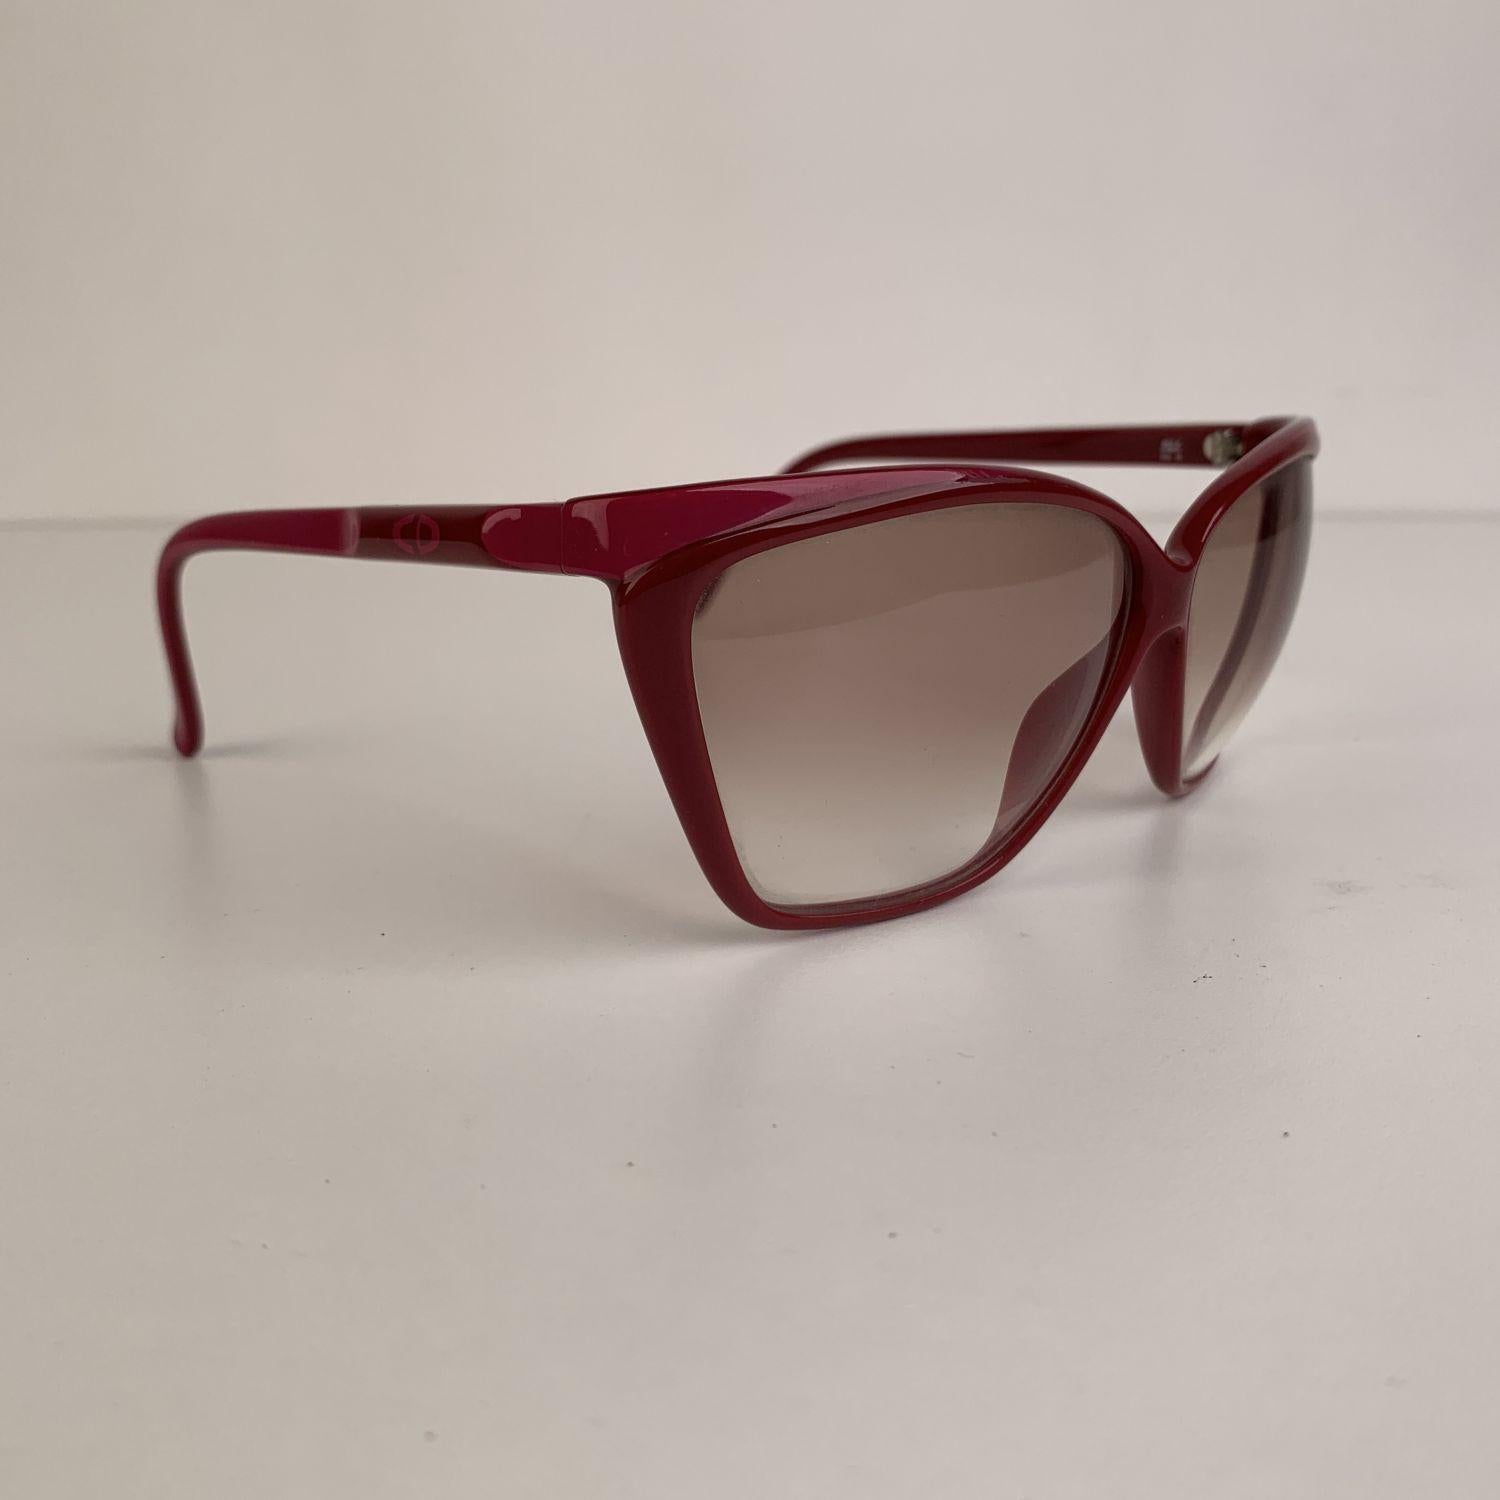 burgundy frame sunglasses